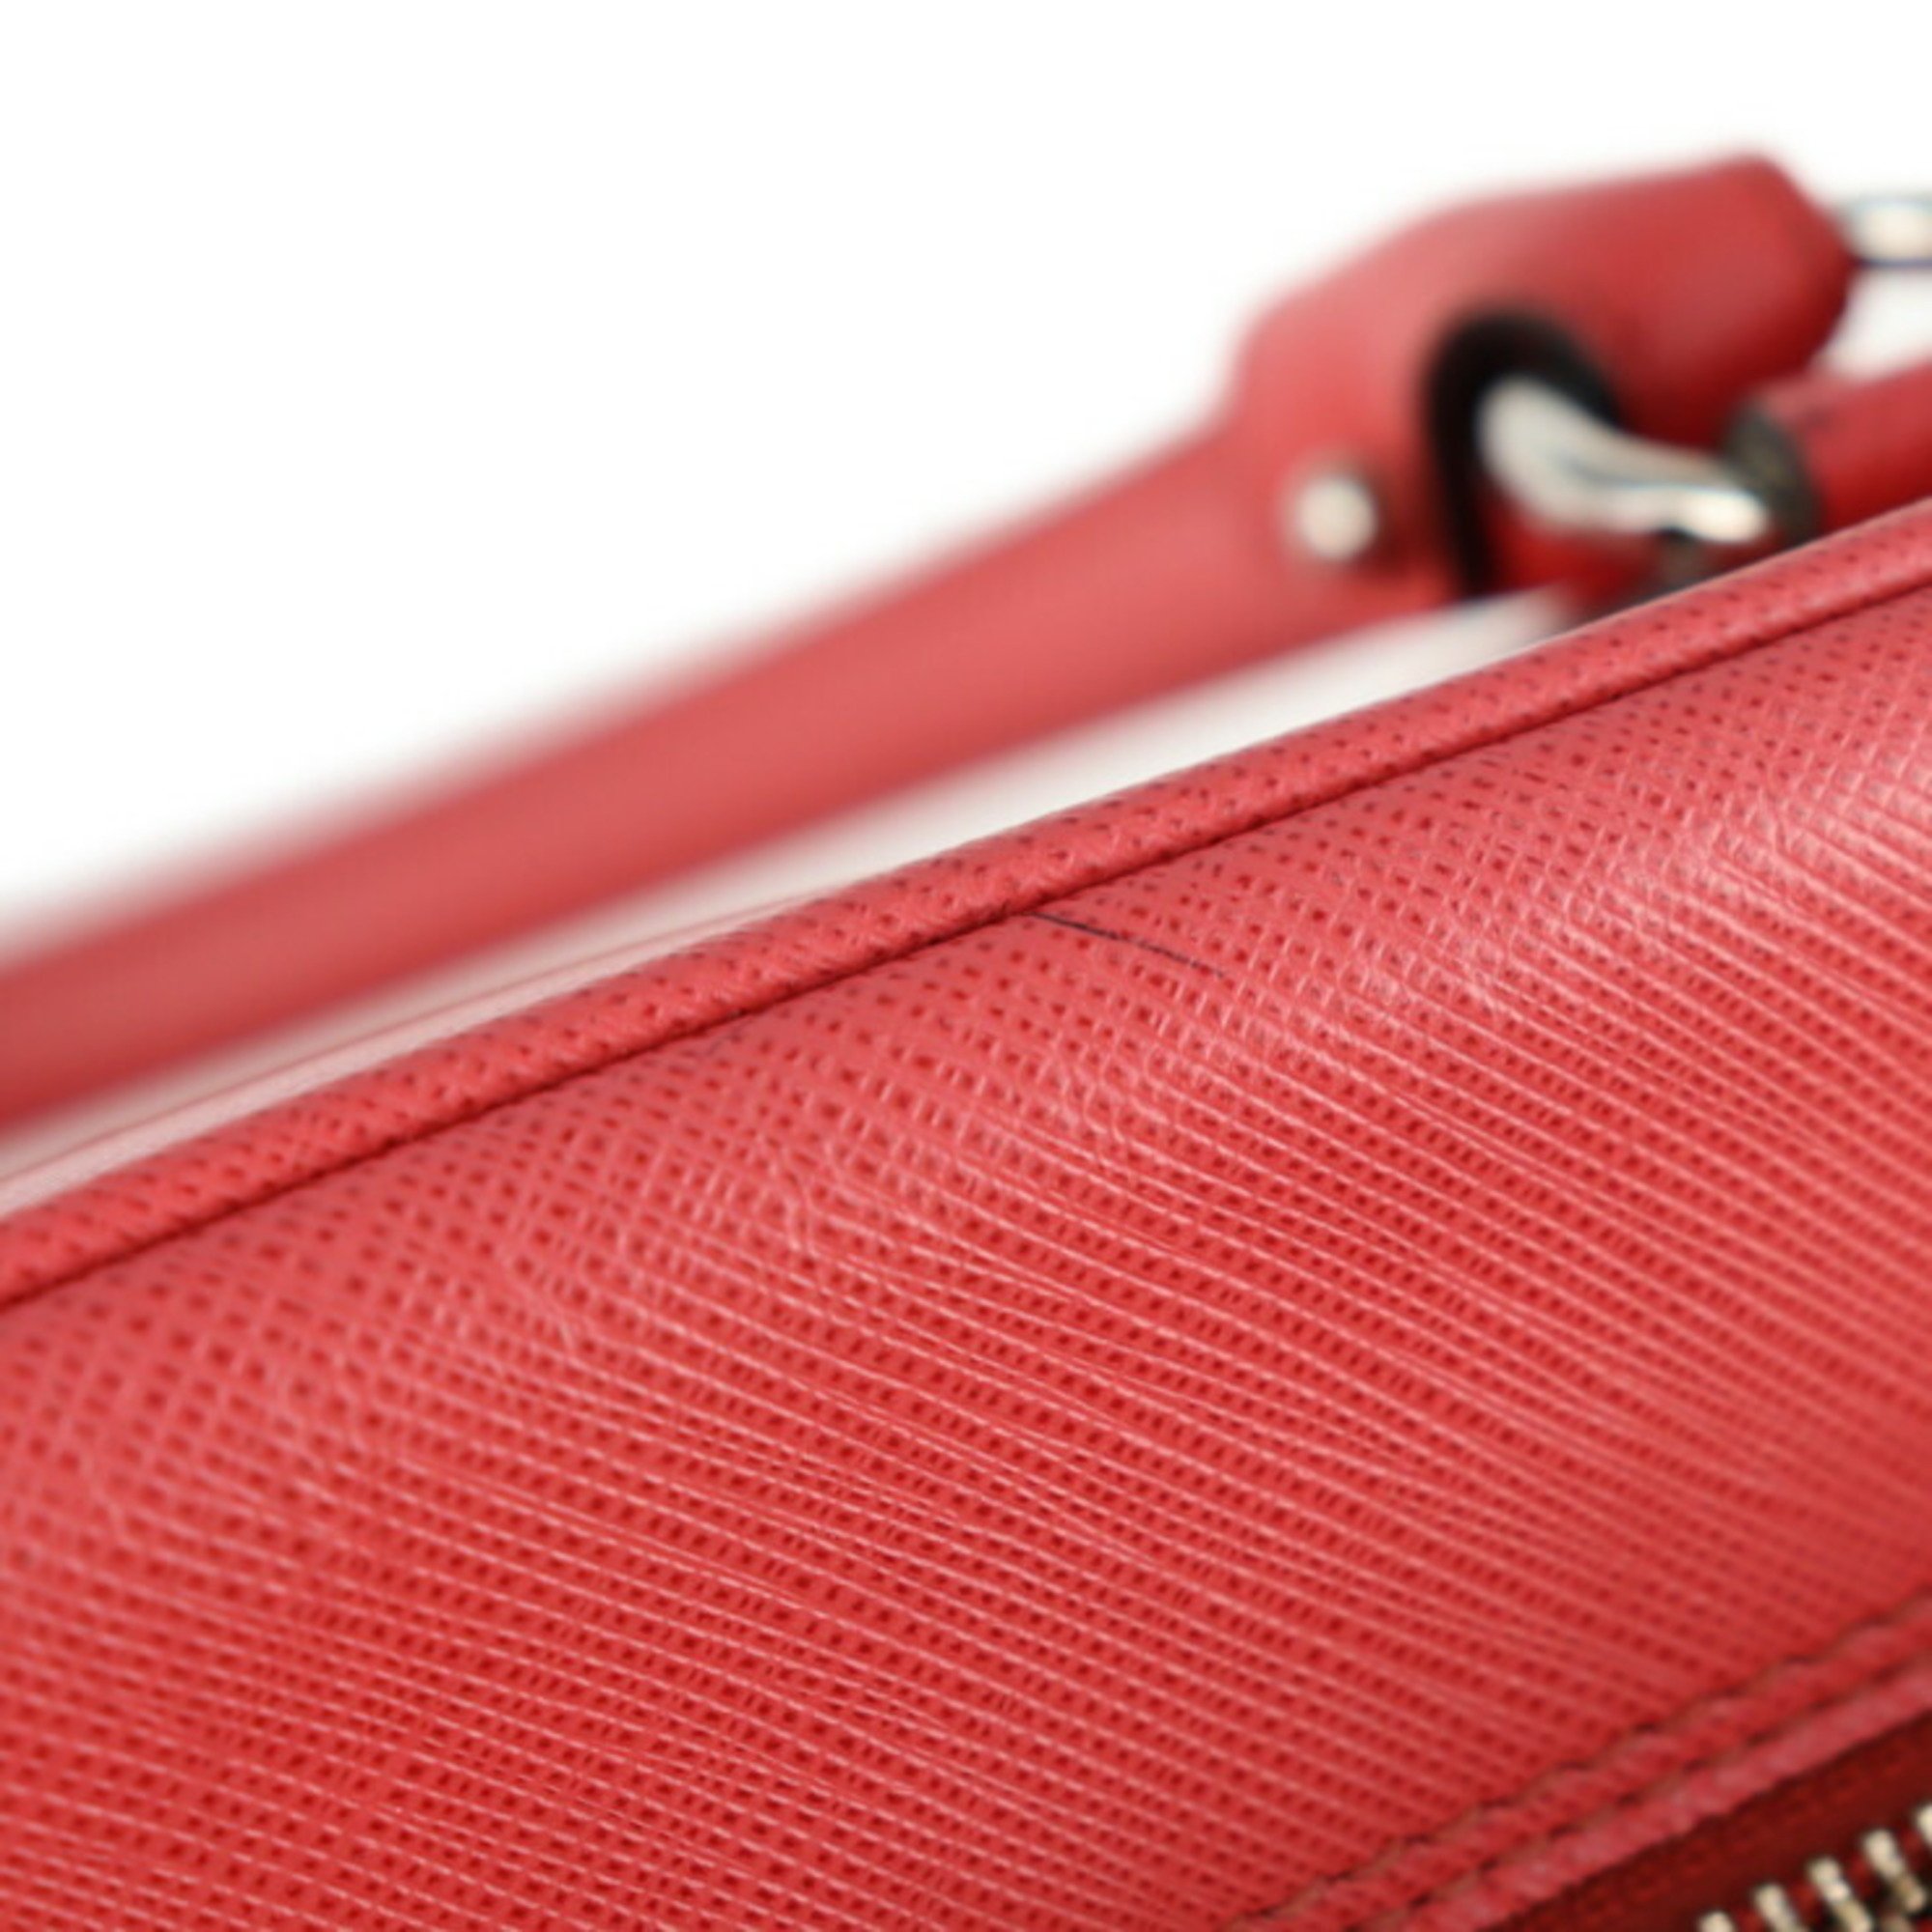 Salvatore Ferragamo Gancini handbag EE 21 B713 leather pink mini Boston bag